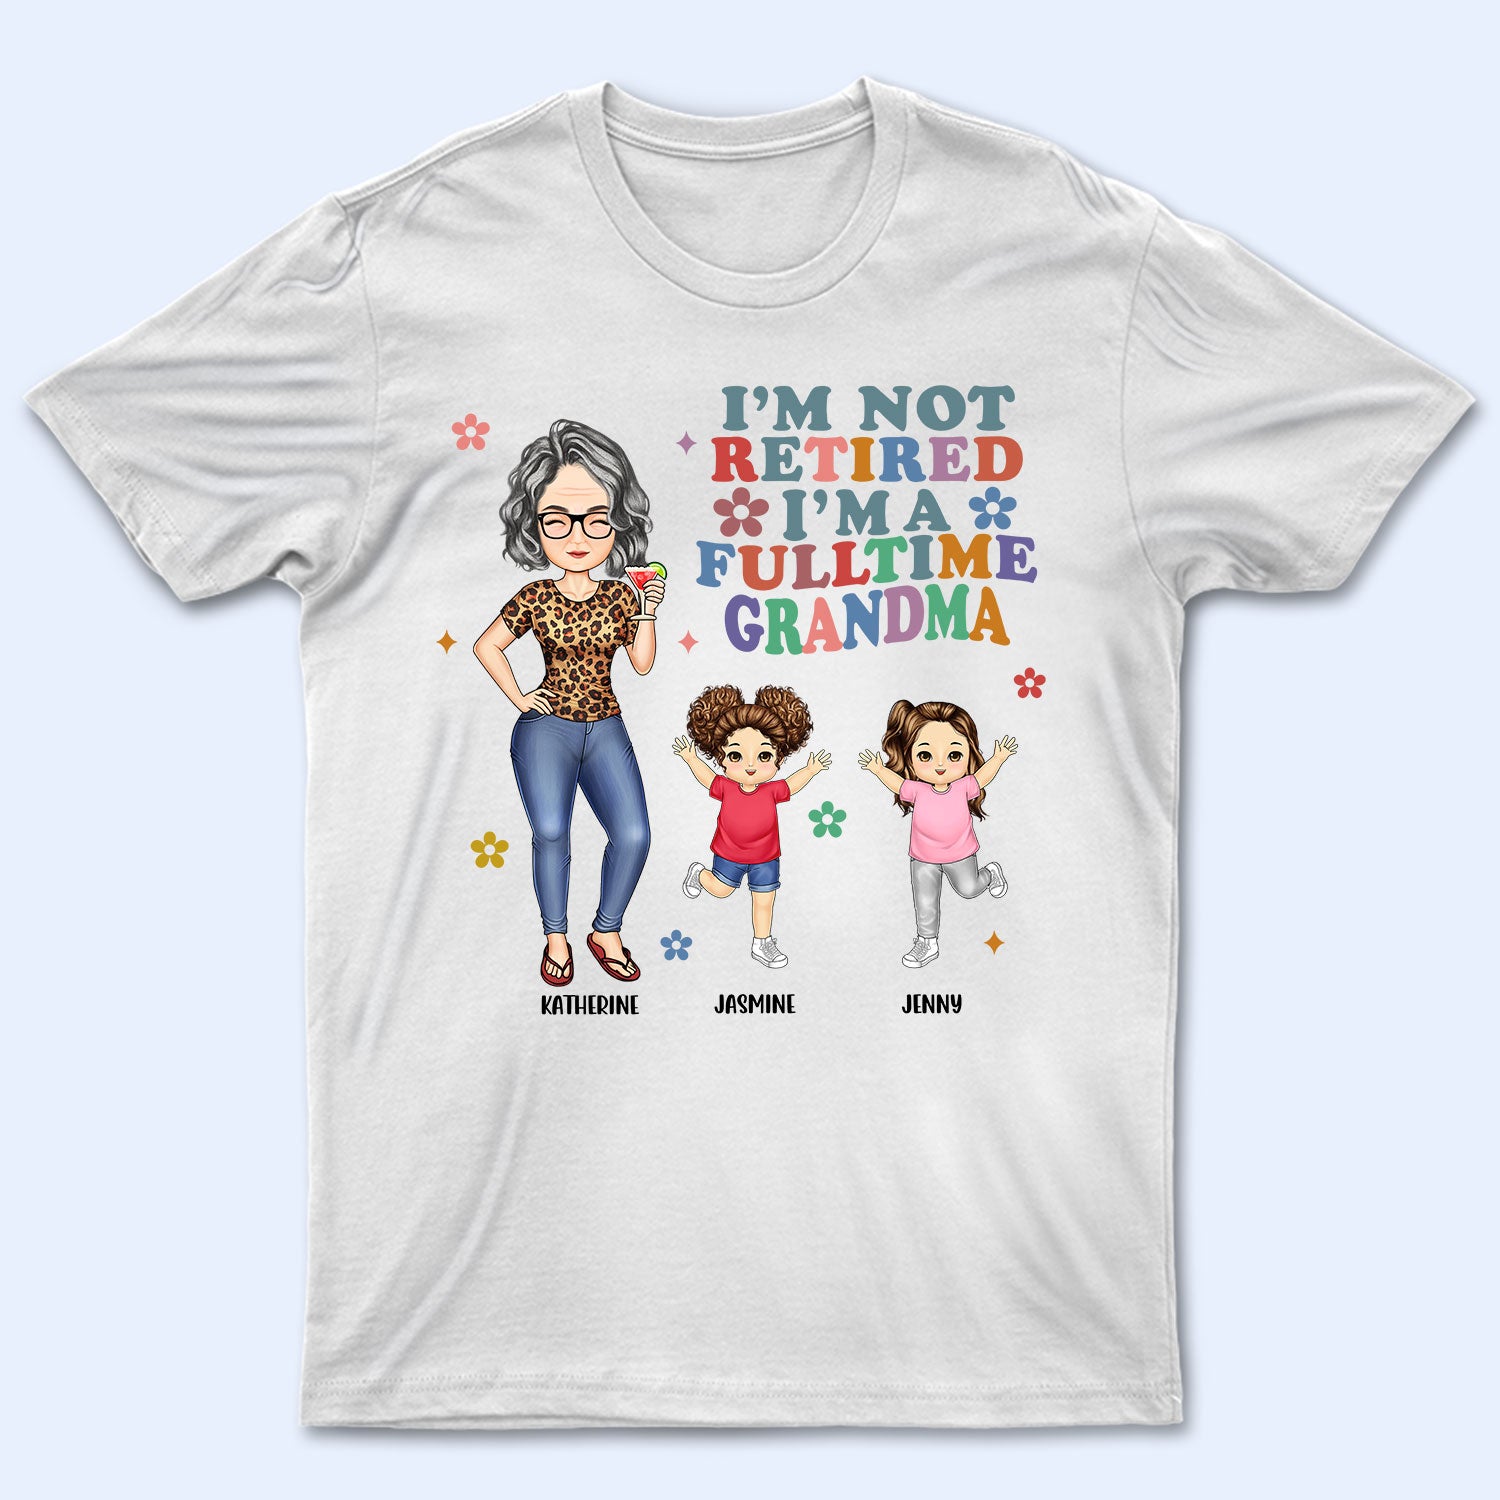 Grandma I'm Not Retired - Gift For Mother & Grandma - Personalized T Shirt